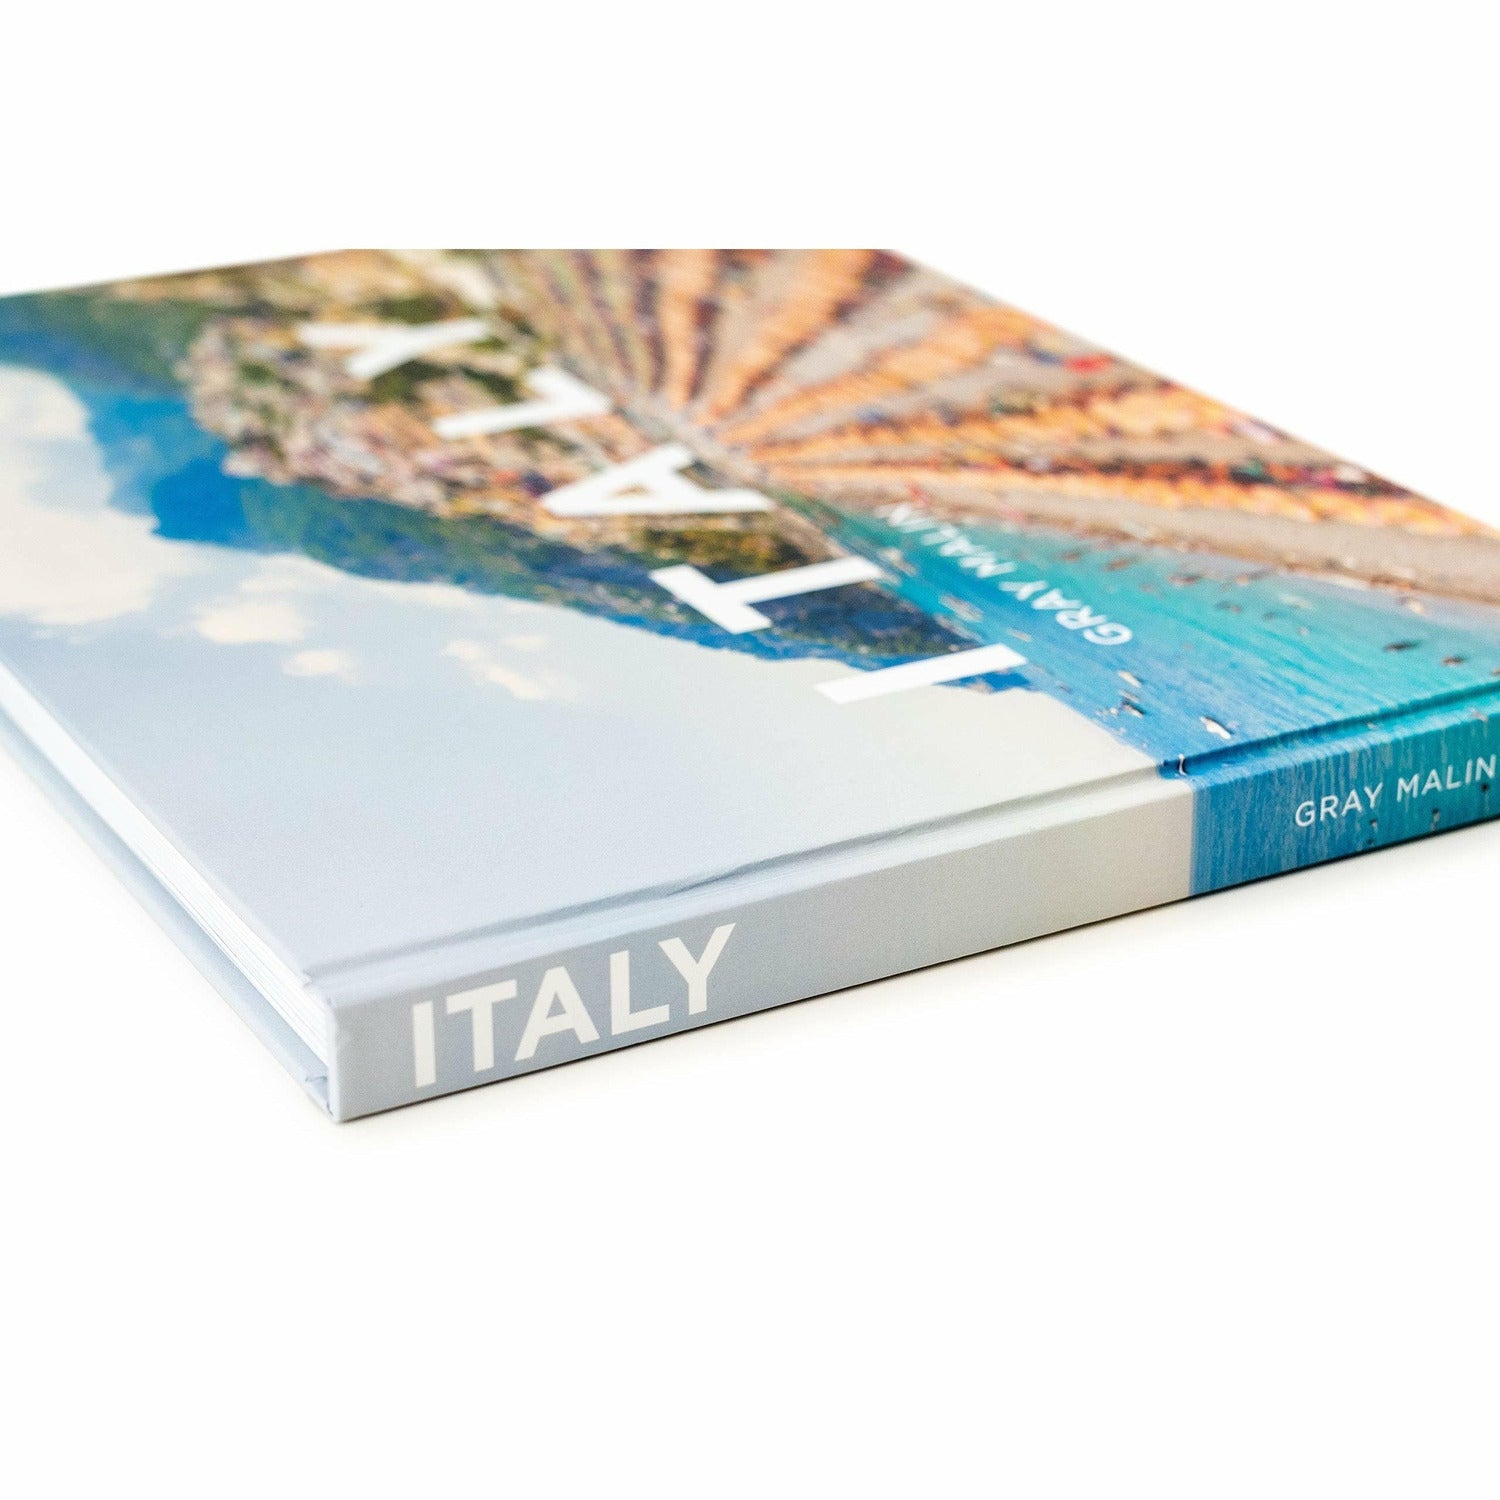 GRAY MALIN: ITALY-HACHETTE BOOK GROUP-Kitson LA